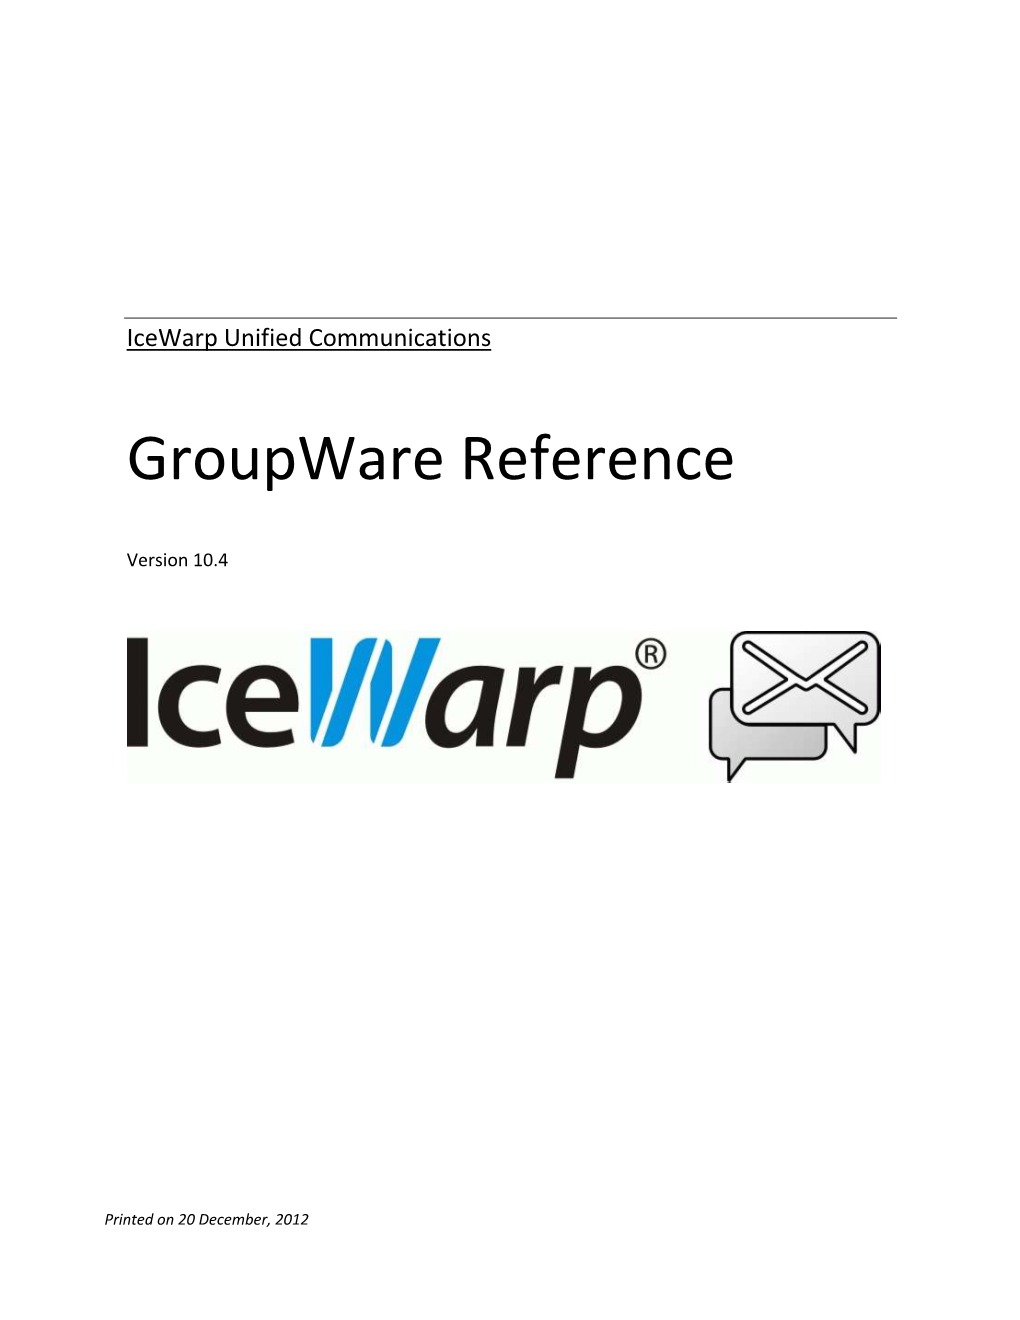 Groupware Reference